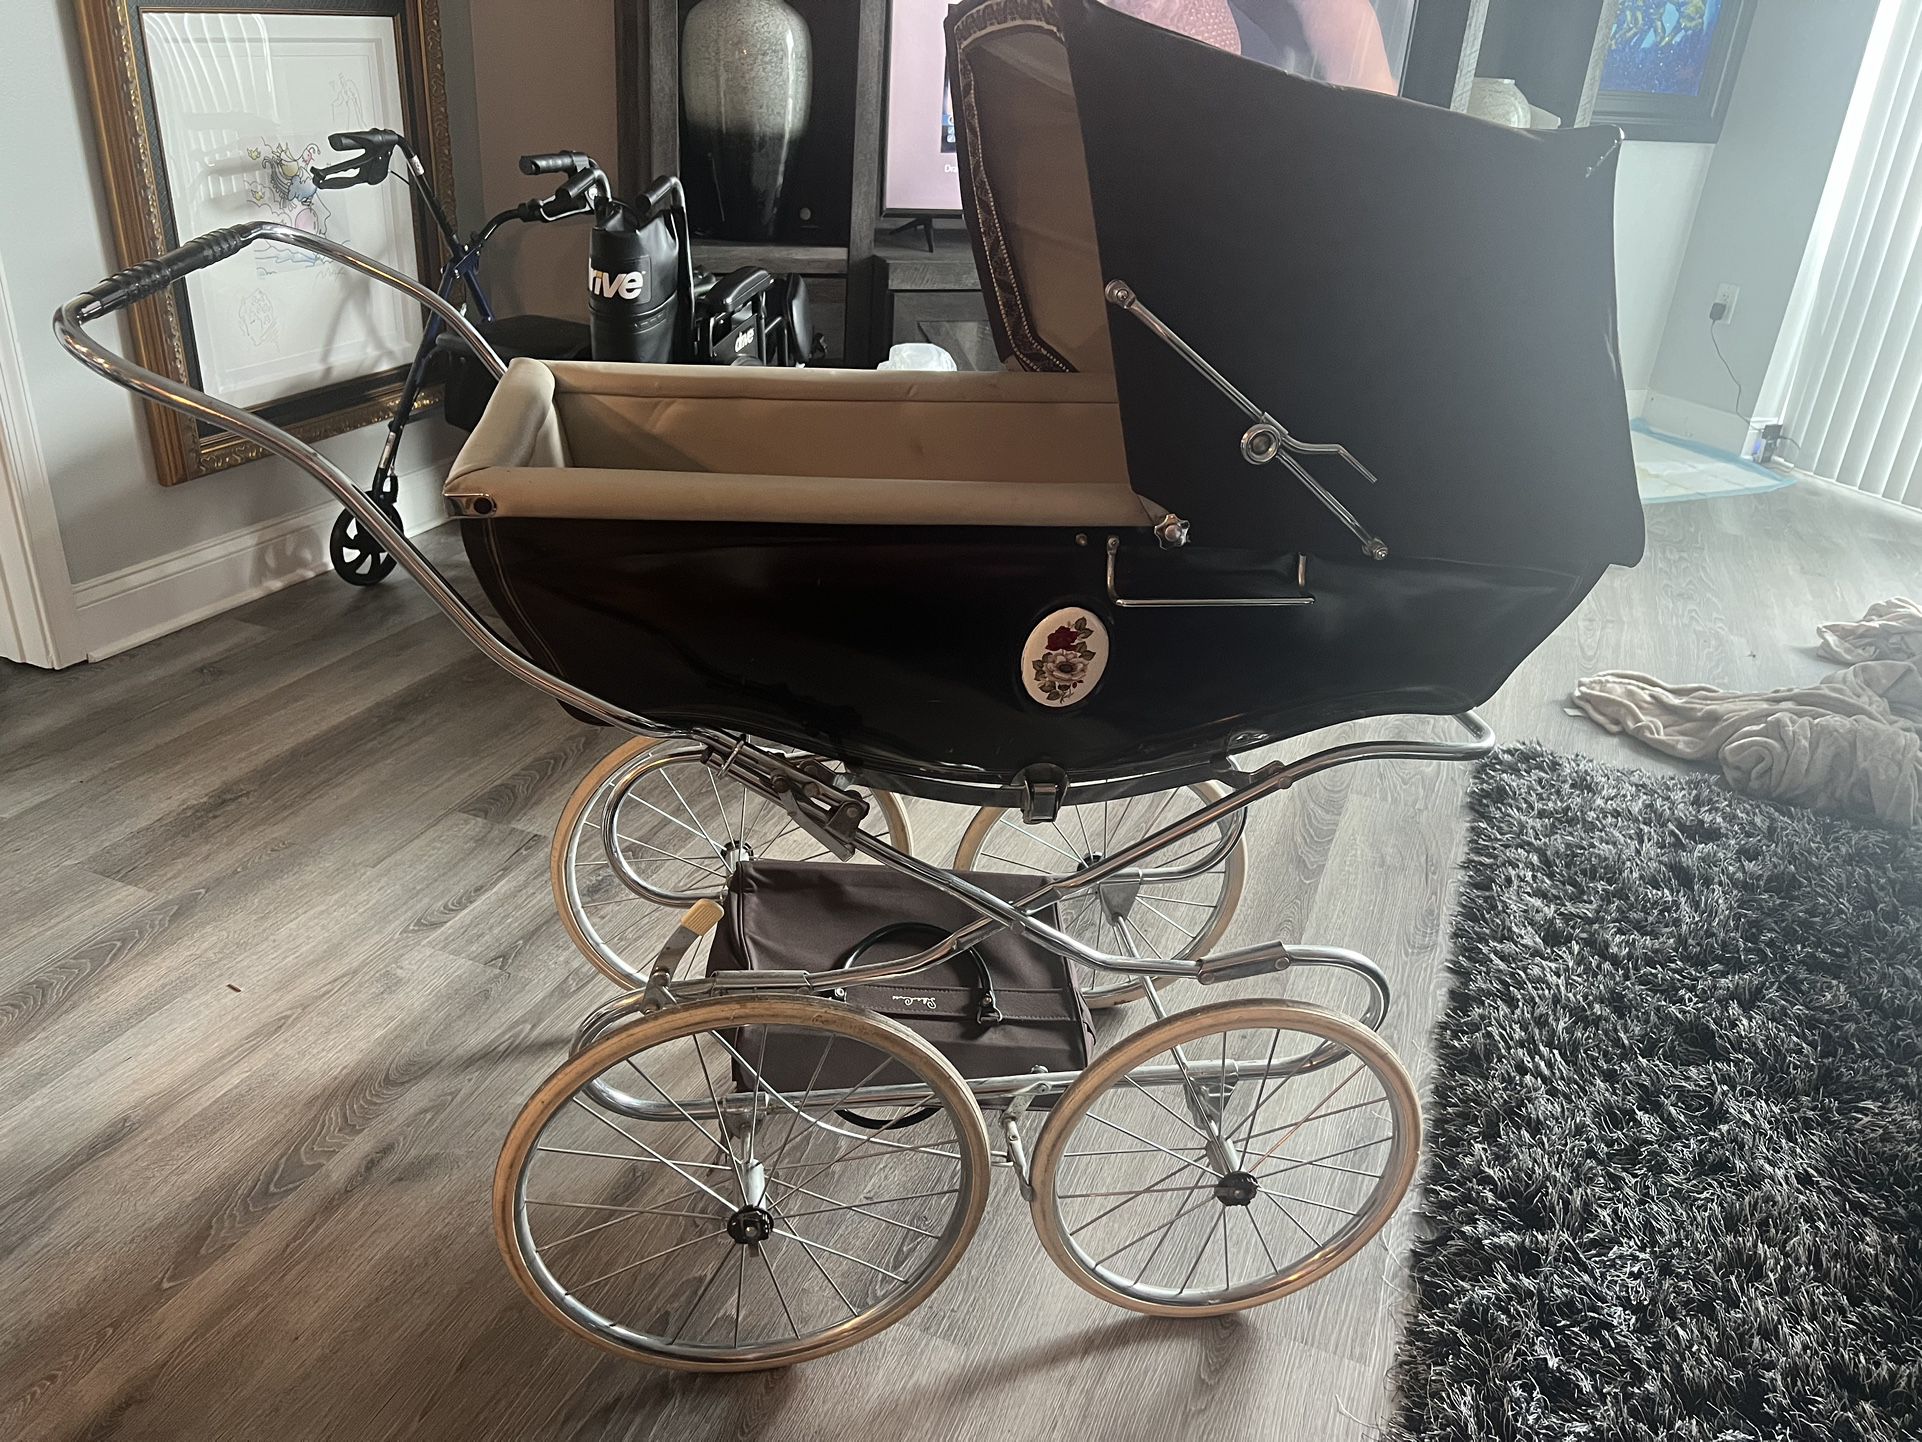 Perambulator Baby Stroller Antique 